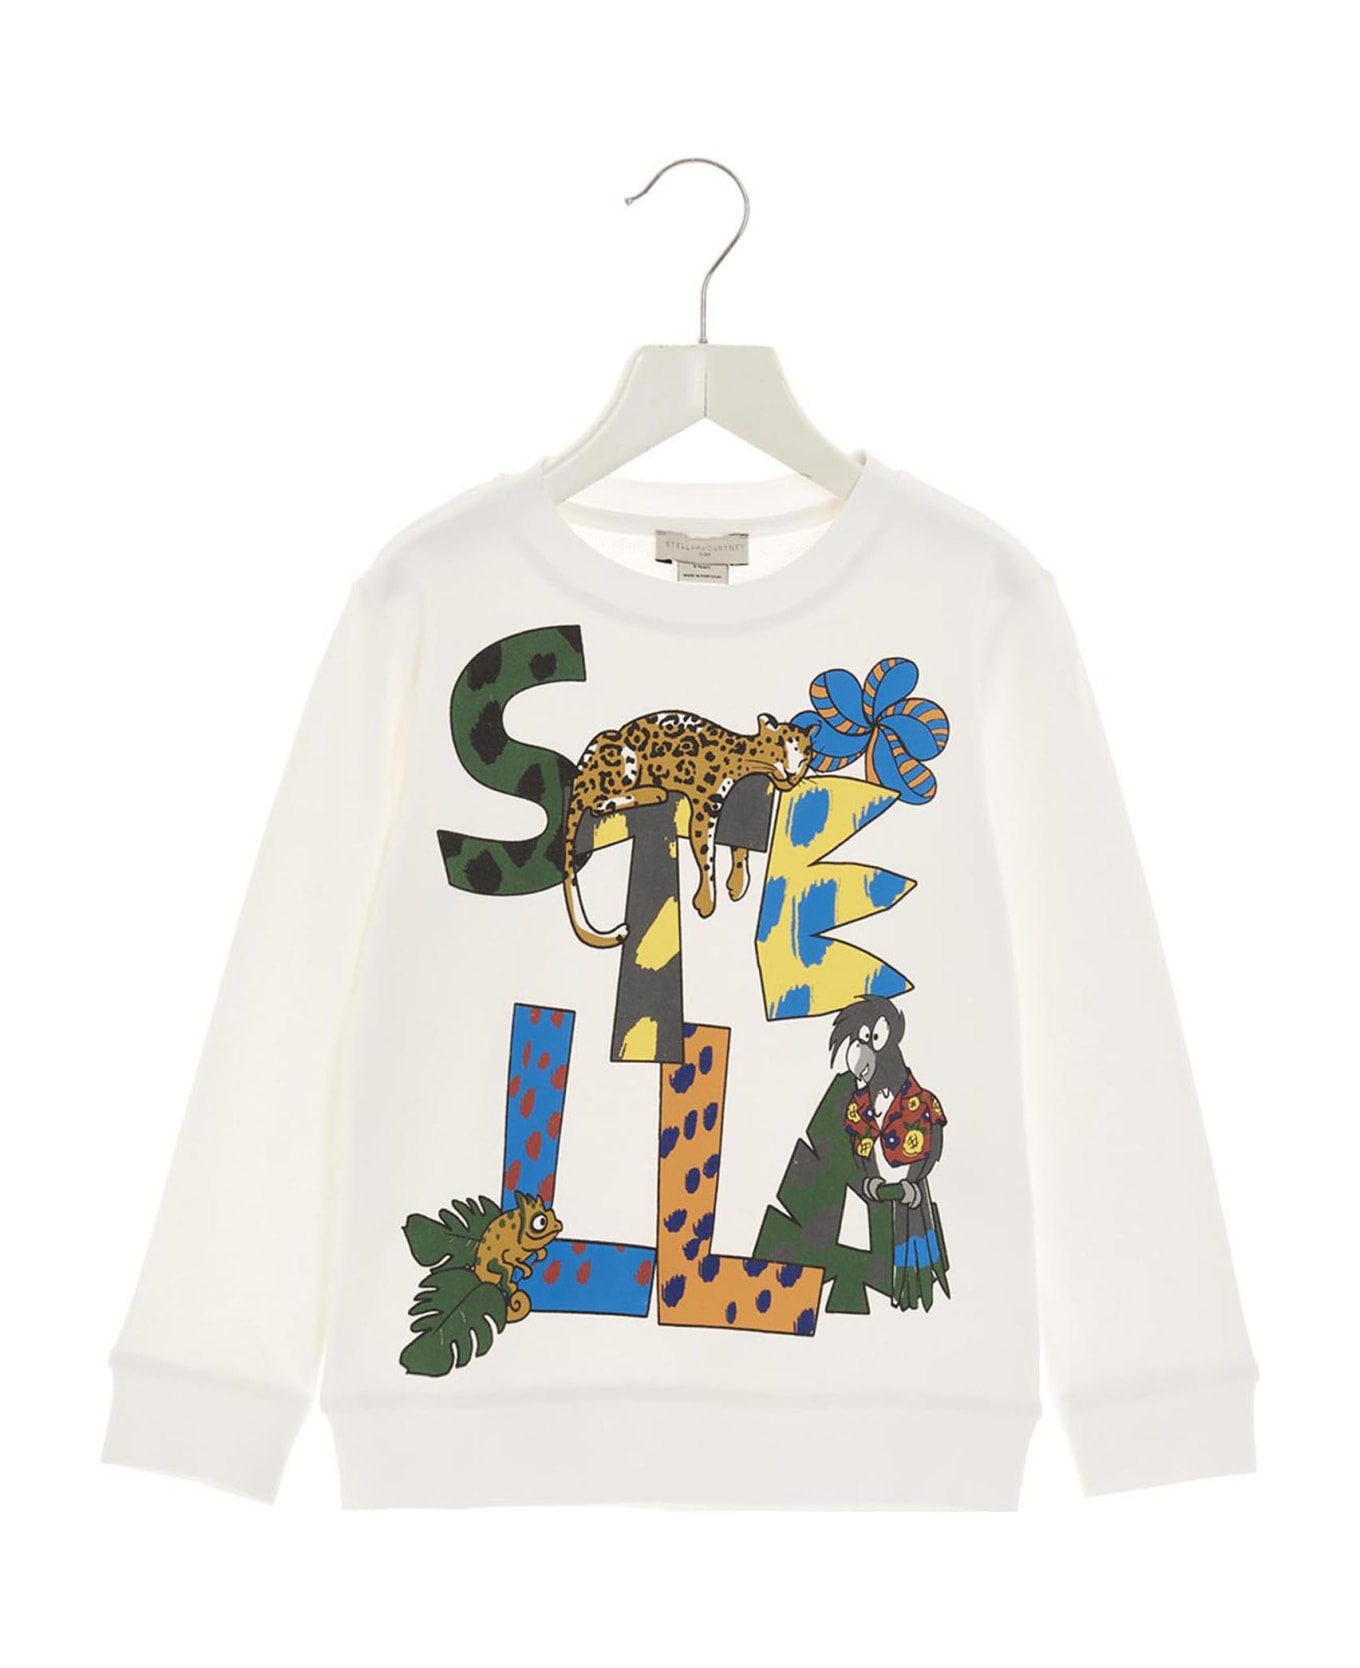 Stella McCartney Kids Printed Sweatshirt - White